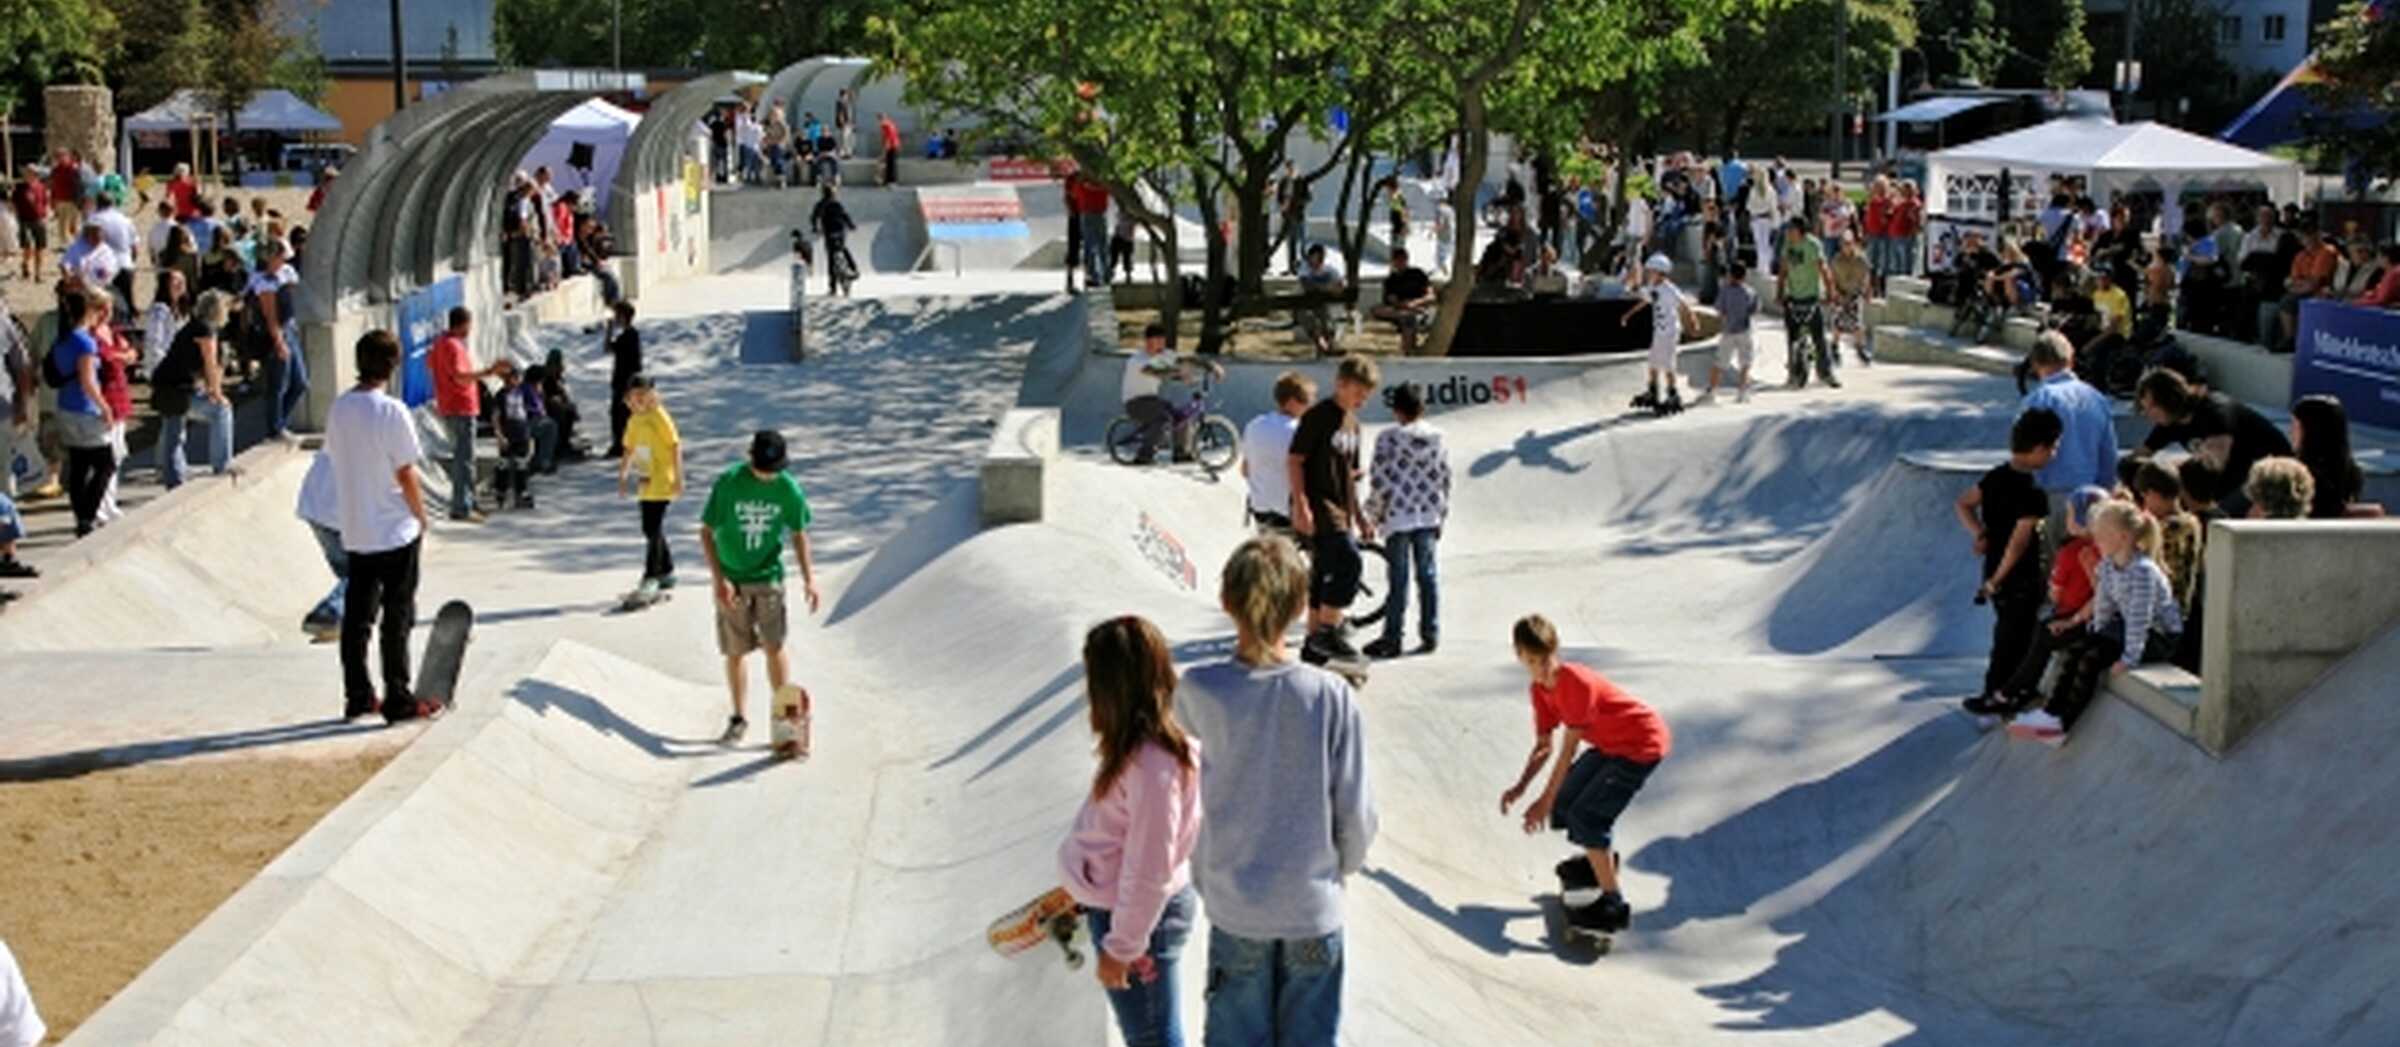 Skatepark "Rollmops" Hallorenstraße